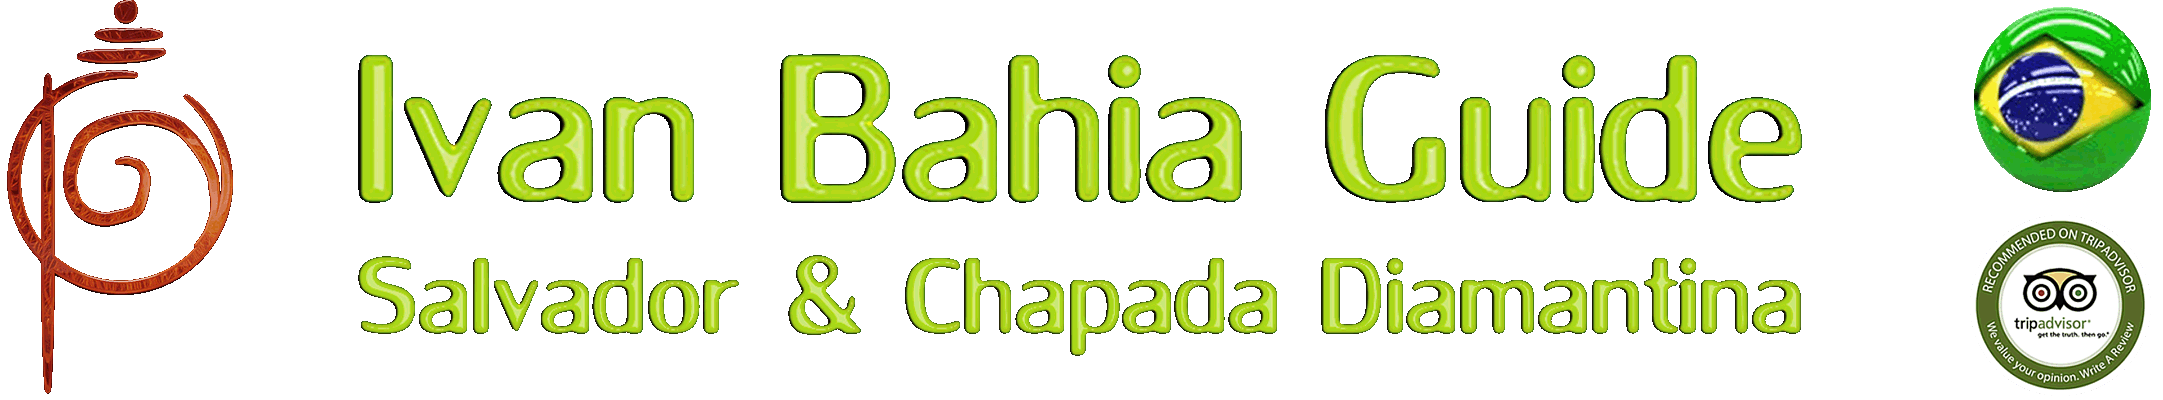 logo Bahia Guide & Chapada Diamantina Mountains  / Ivan Bahia Guide, traveling in Brazil, reisgids in Brazilie,#IvanBahiaGuide,#SalvadorBahiaBrazil,#Bresil,#BresilEssentiel,#BrazilEssential,#ChapadaDiamantina,#Brazilie,#ToursByLocals,#GayTravelBrazil,#IBG,#FotosBahia,#BahiaTourism,#SalvadorBahiaTravel,#FotosChapadaDiamantina,#fernandobingretourguide,#BrazilTravel,#ChapadaDiamantinaGuide,#ChapadaDiamantinaTrekking,#Chapadaadventure,#BahiaMetisse,#BahiaGuide,#diamantinamountains,#DiamondMountains,#ValedoPati,#PatyValley,#ValeCapao,#Bahia,#Lençois,#MorroPaiInacio